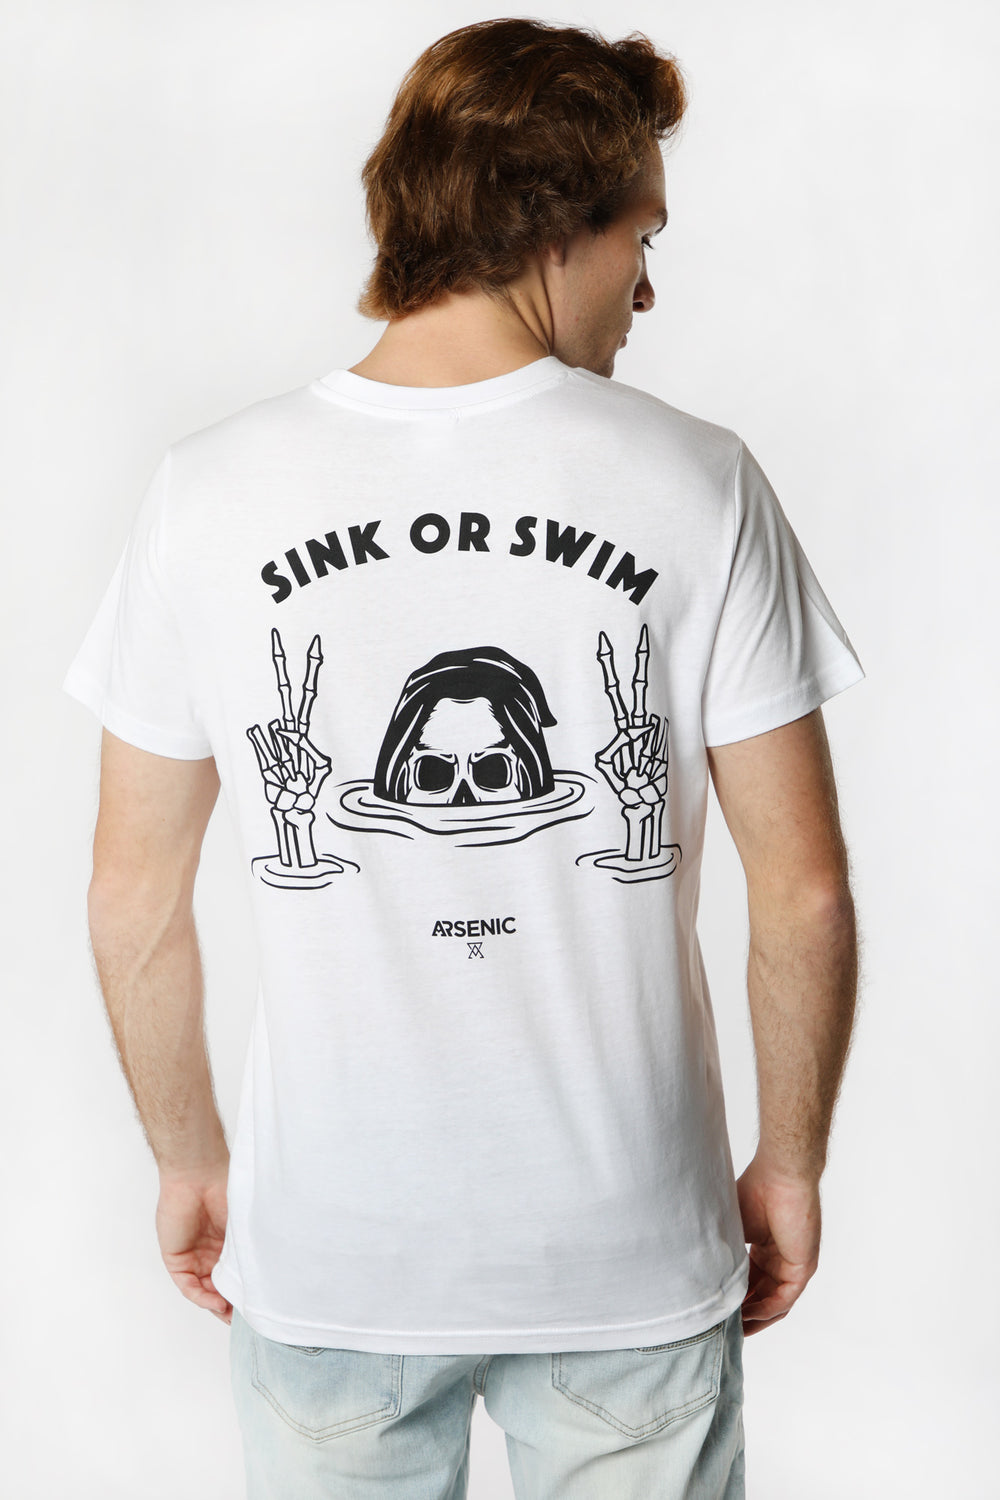 T-Shirt Imprimé Sink Or Swim Arsenic Homme T-Shirt Imprimé Sink Or Swim Arsenic Homme